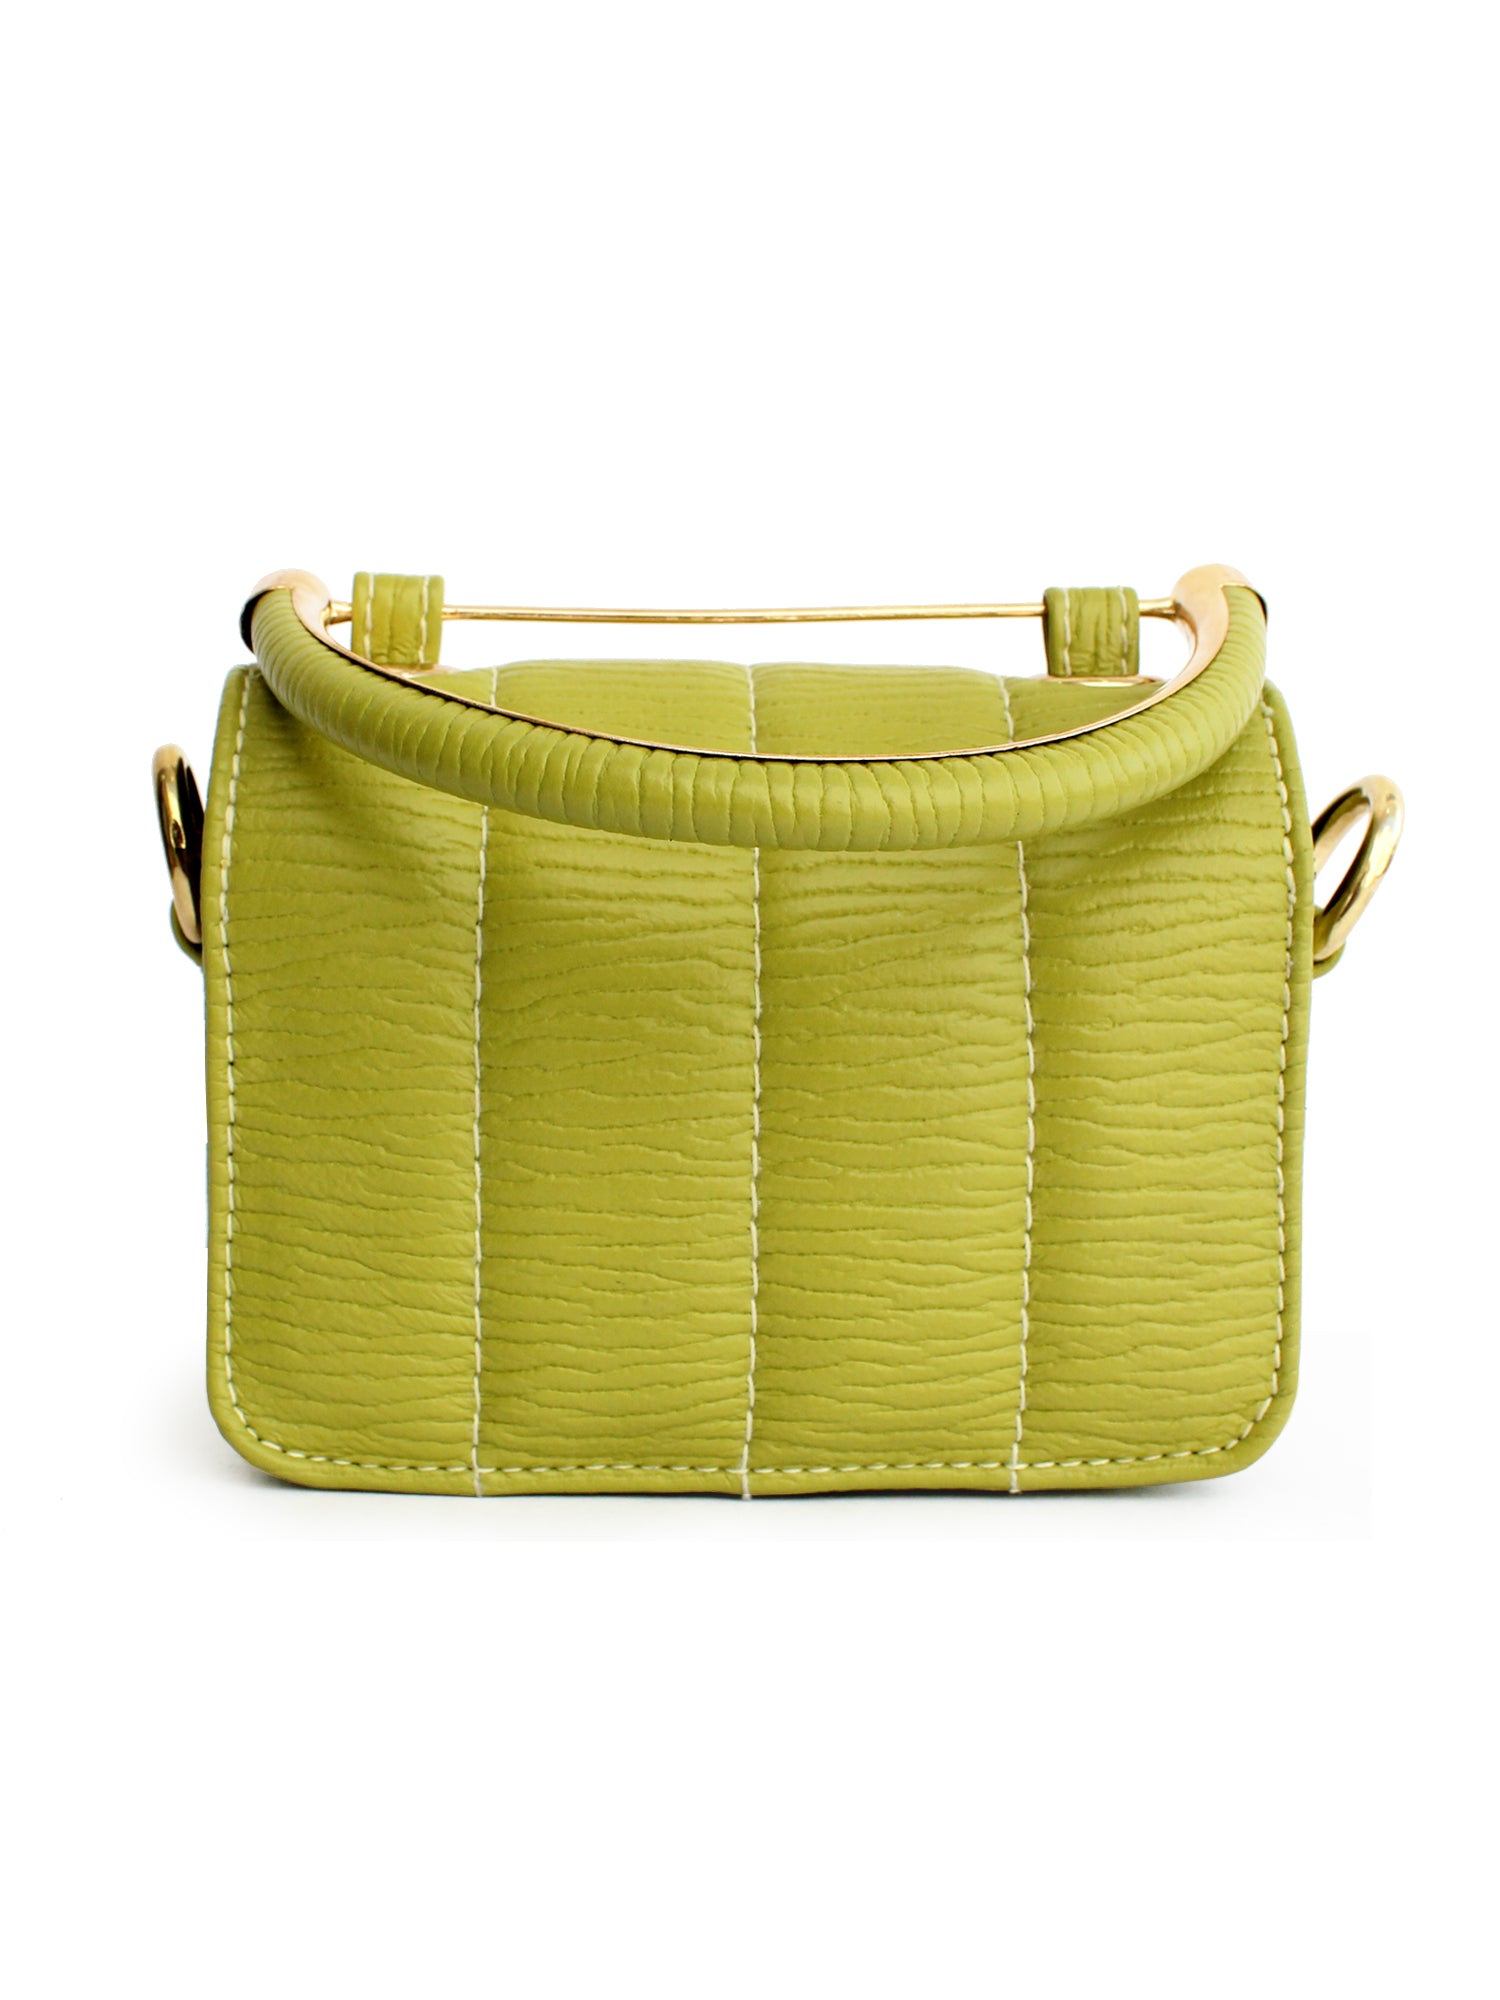 Aldo Women's Sling Bag (Bright Green) : Amazon.in: Fashion